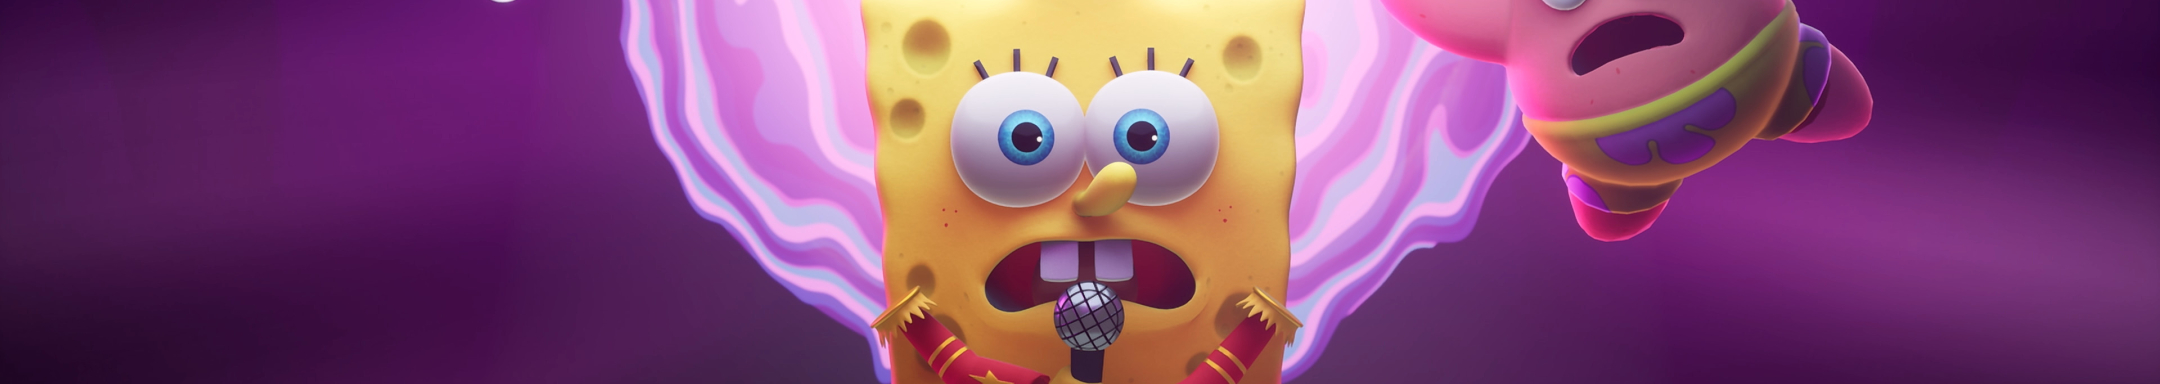 2160x384 Spongebob Squarepants The Cosmic Shake 4k 2160x384 Resolution Wallpaper Hd Games 4k 0774